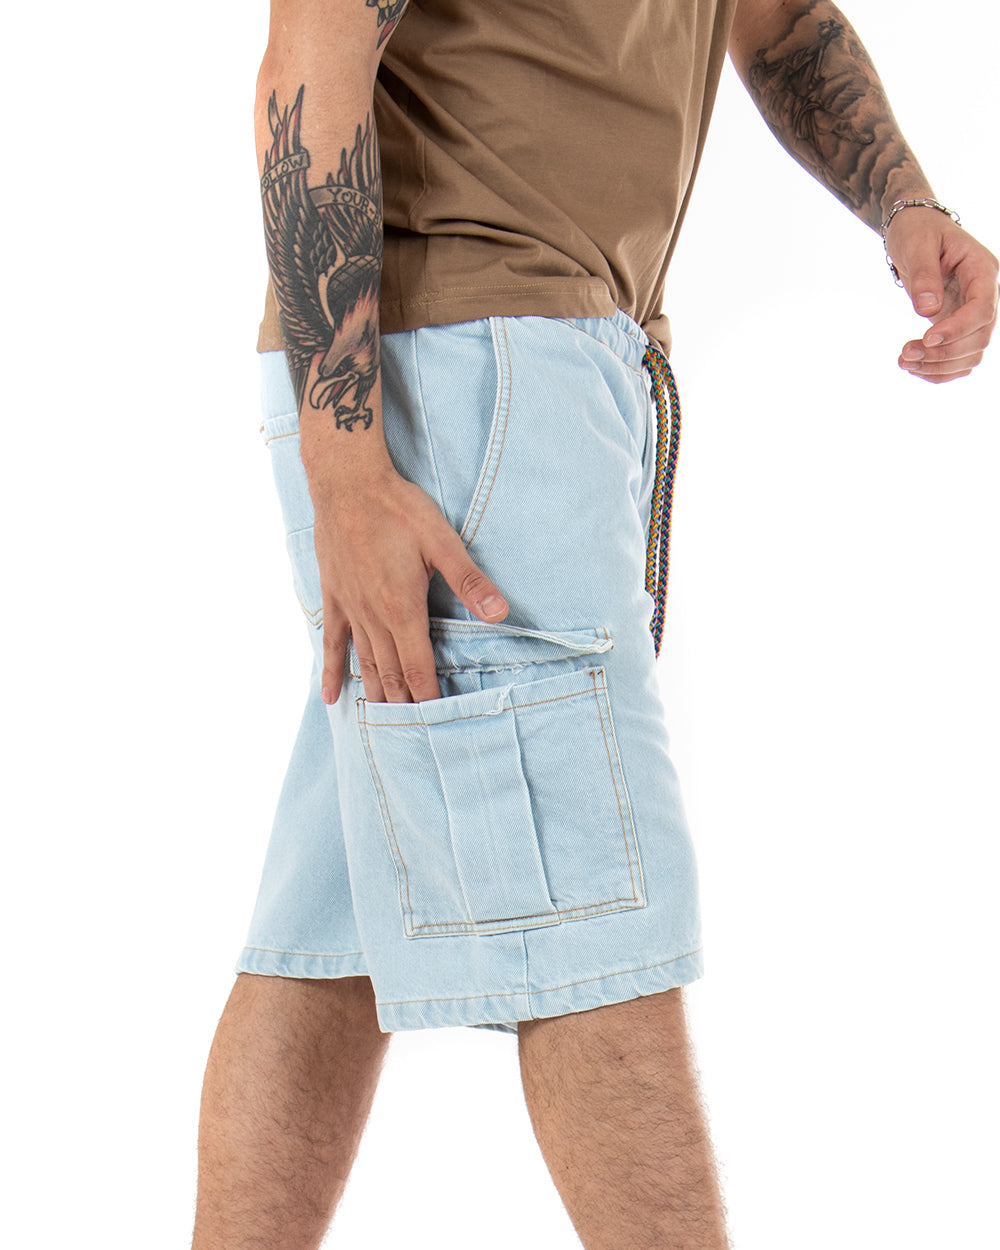 Bermuda Pantaloncino Corto Uomo Cargo Jeans Denim Chiaro GIOSAL-PC1751A